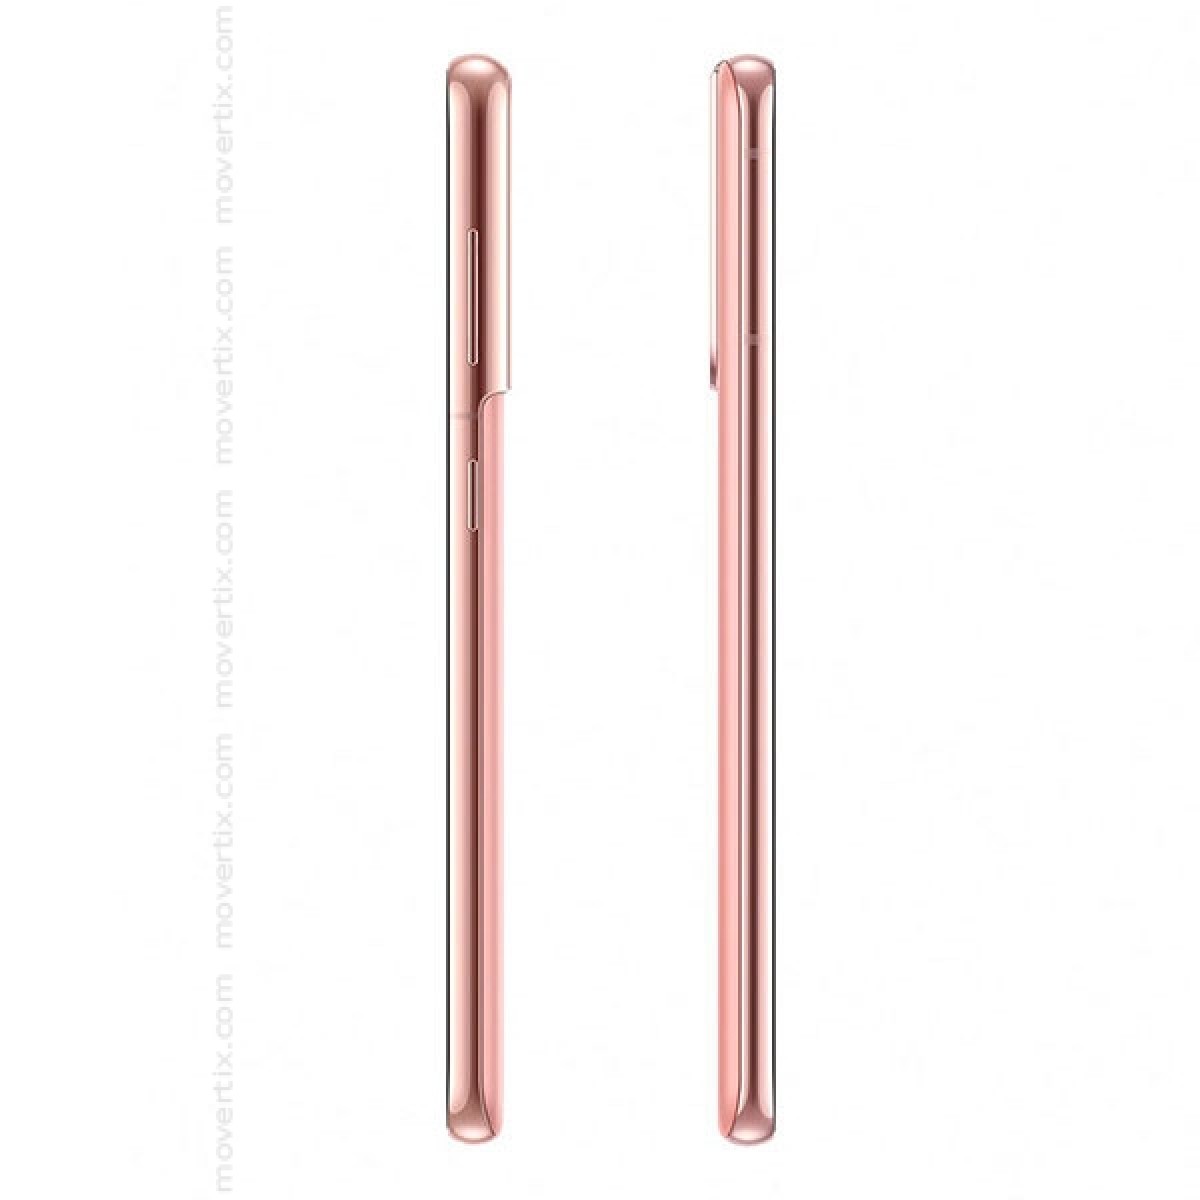 Samsung Galaxy S21 5g Phantom Pink 256gb And 8gb Ram Sm G991b Movertix Mobile Phones Shop